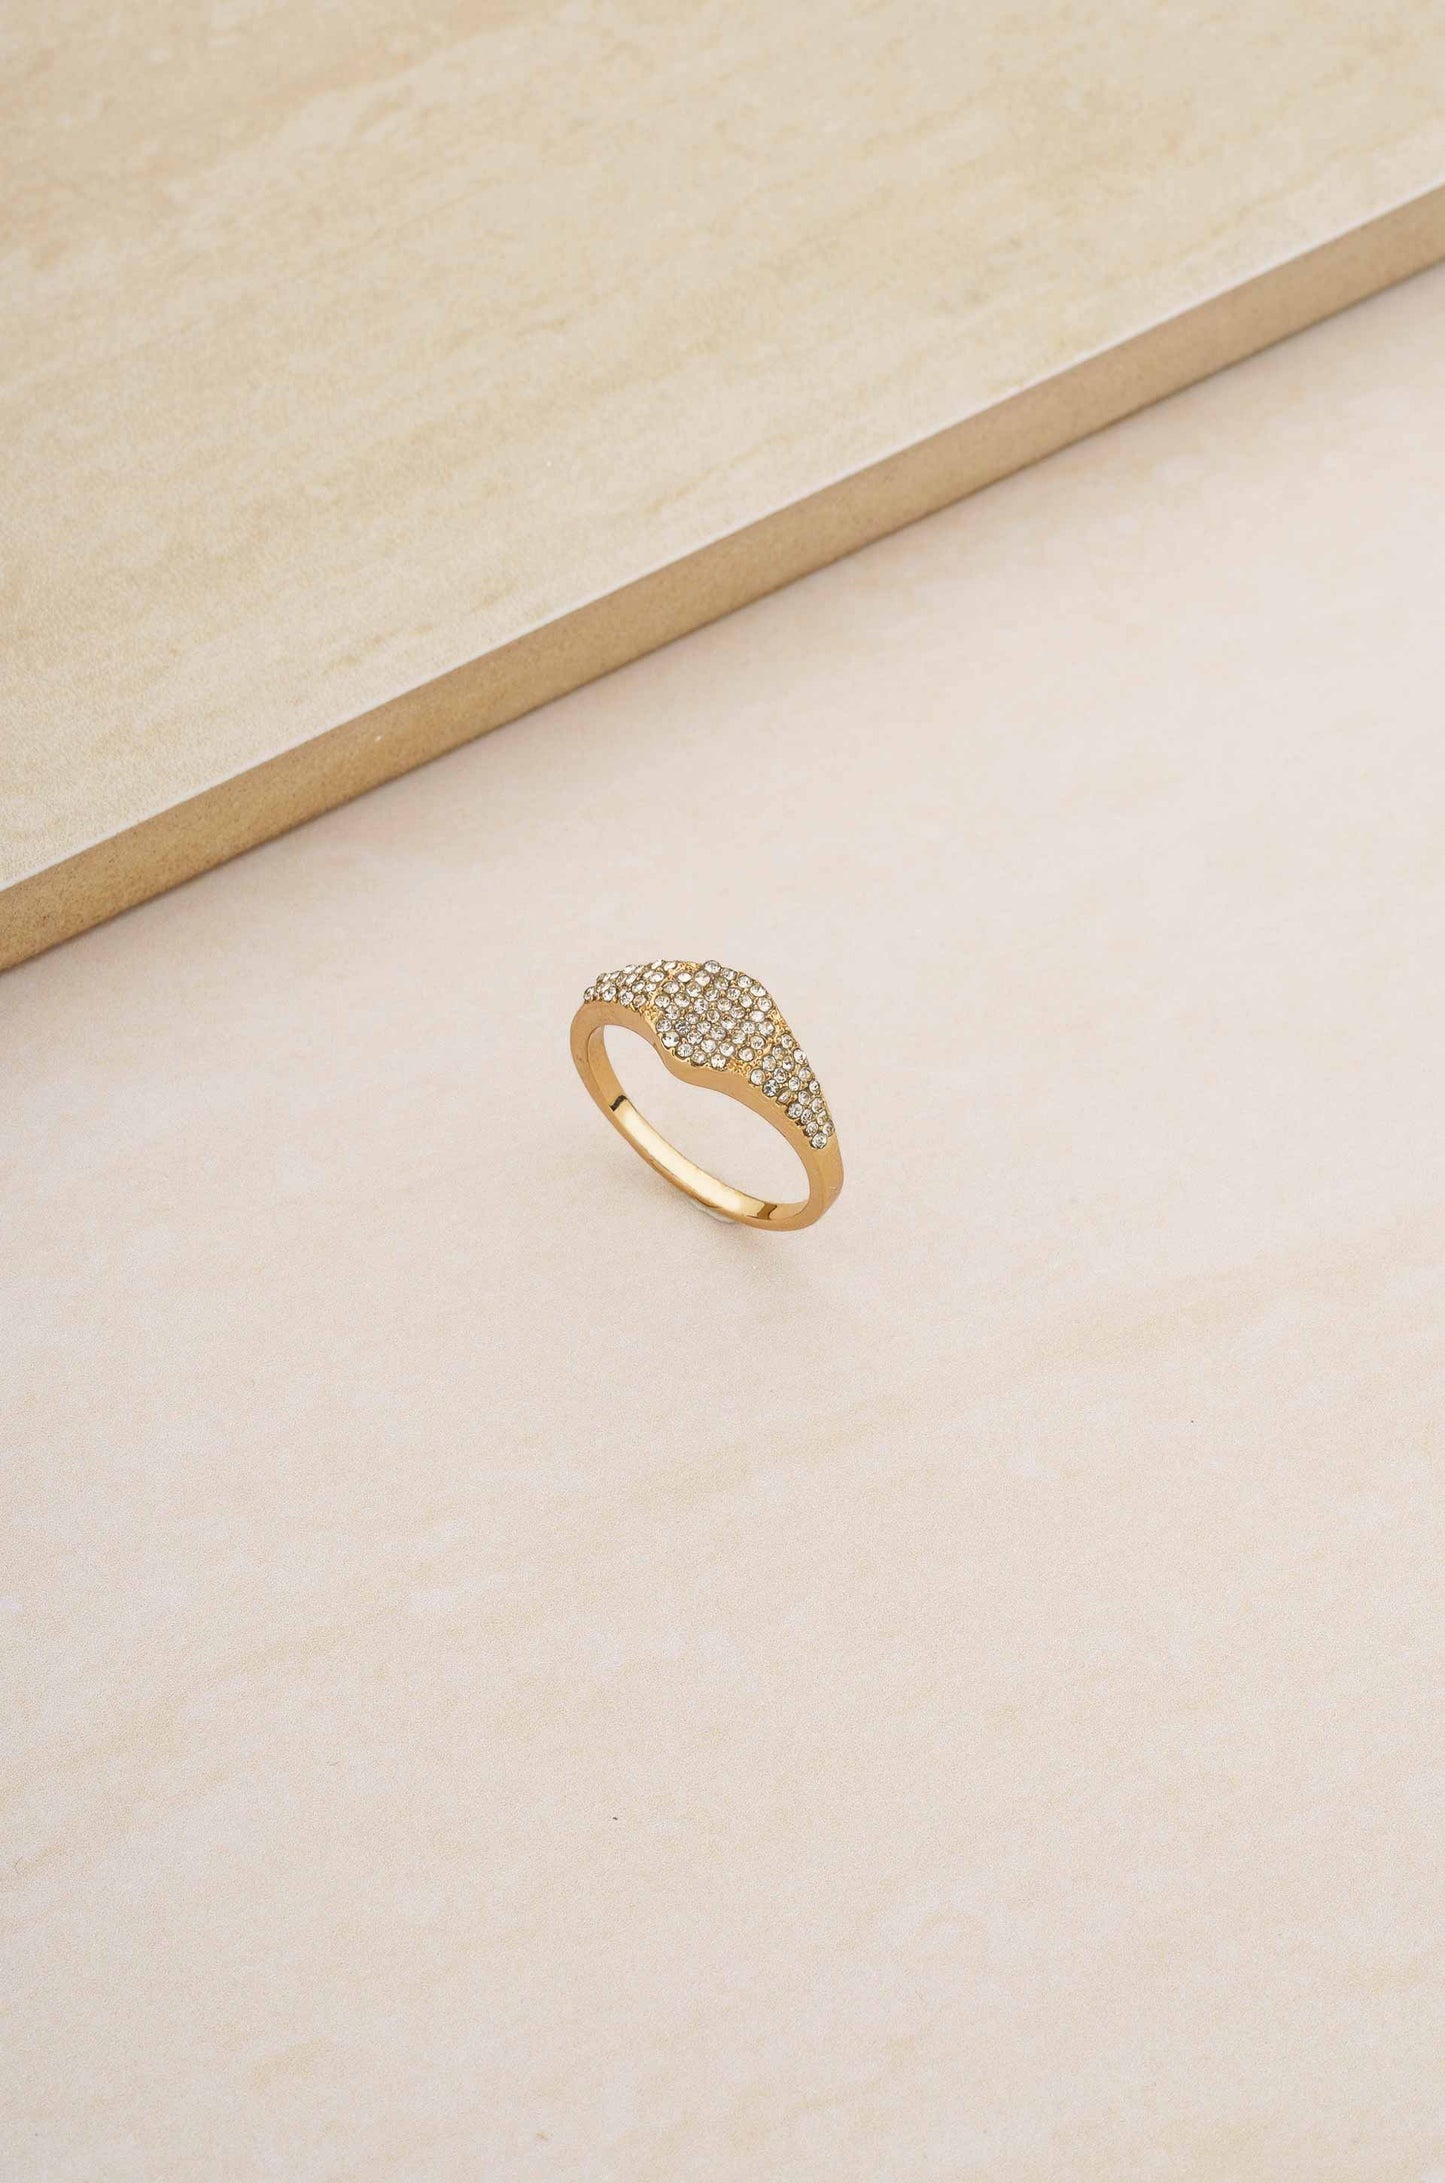 Femme Fatale Crystal 18k Gold Plated Ring on slate background